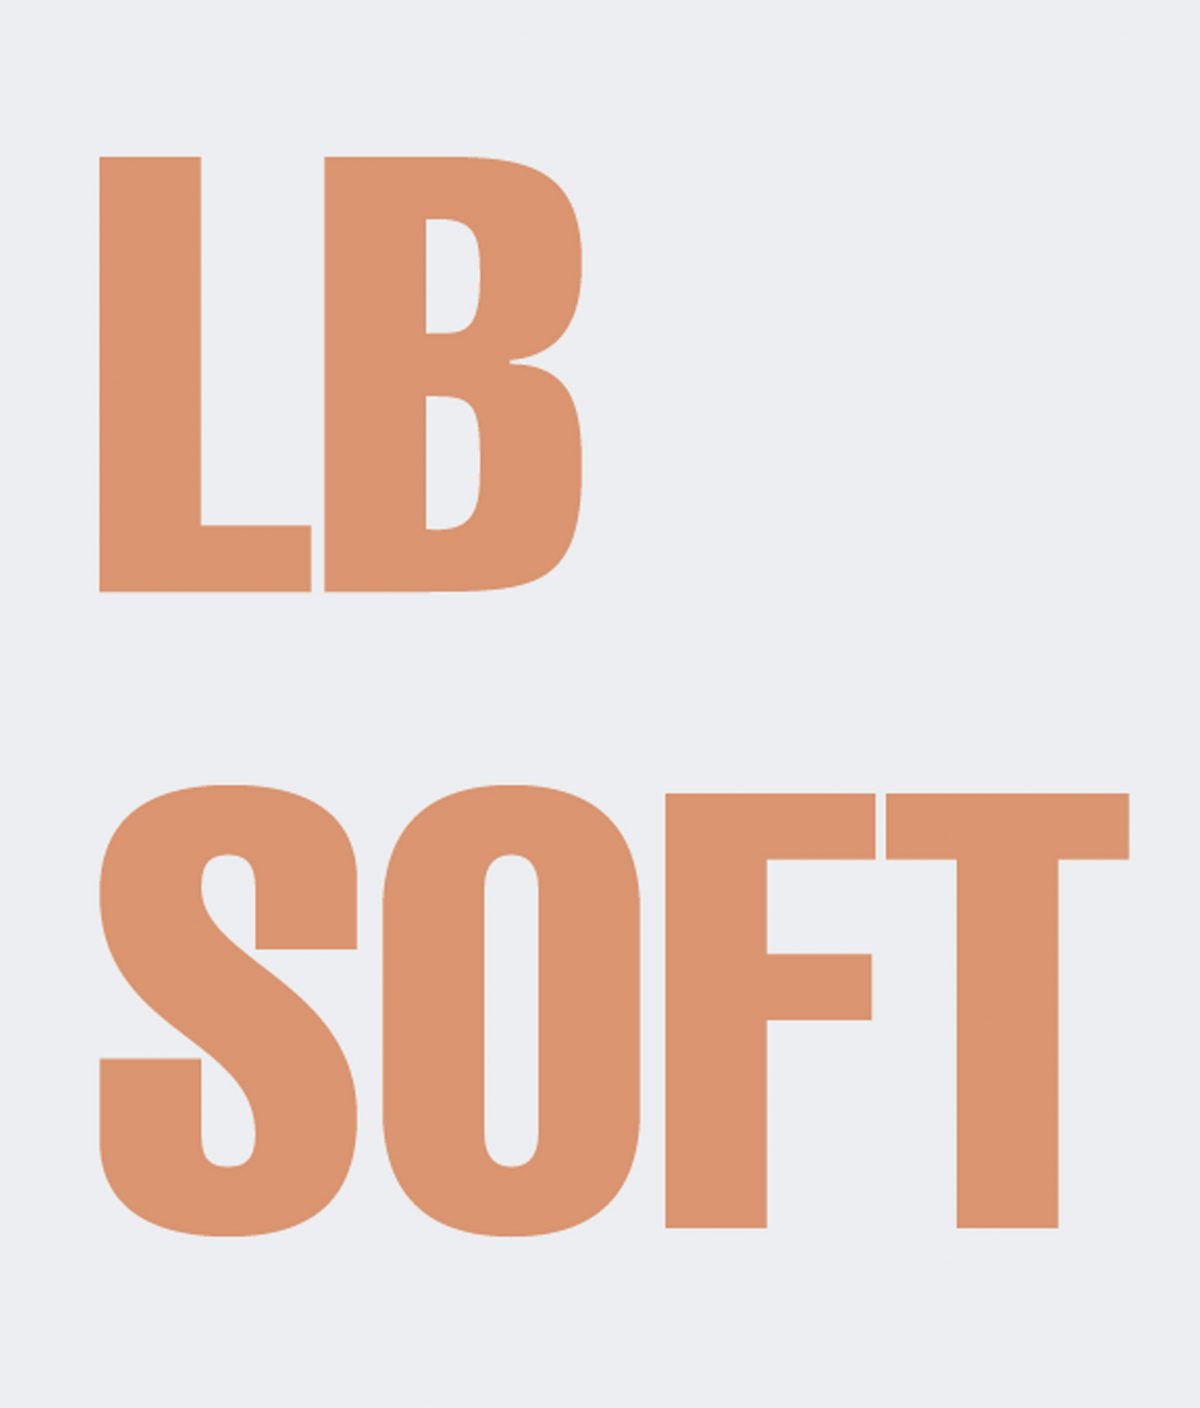 LB-SOFT